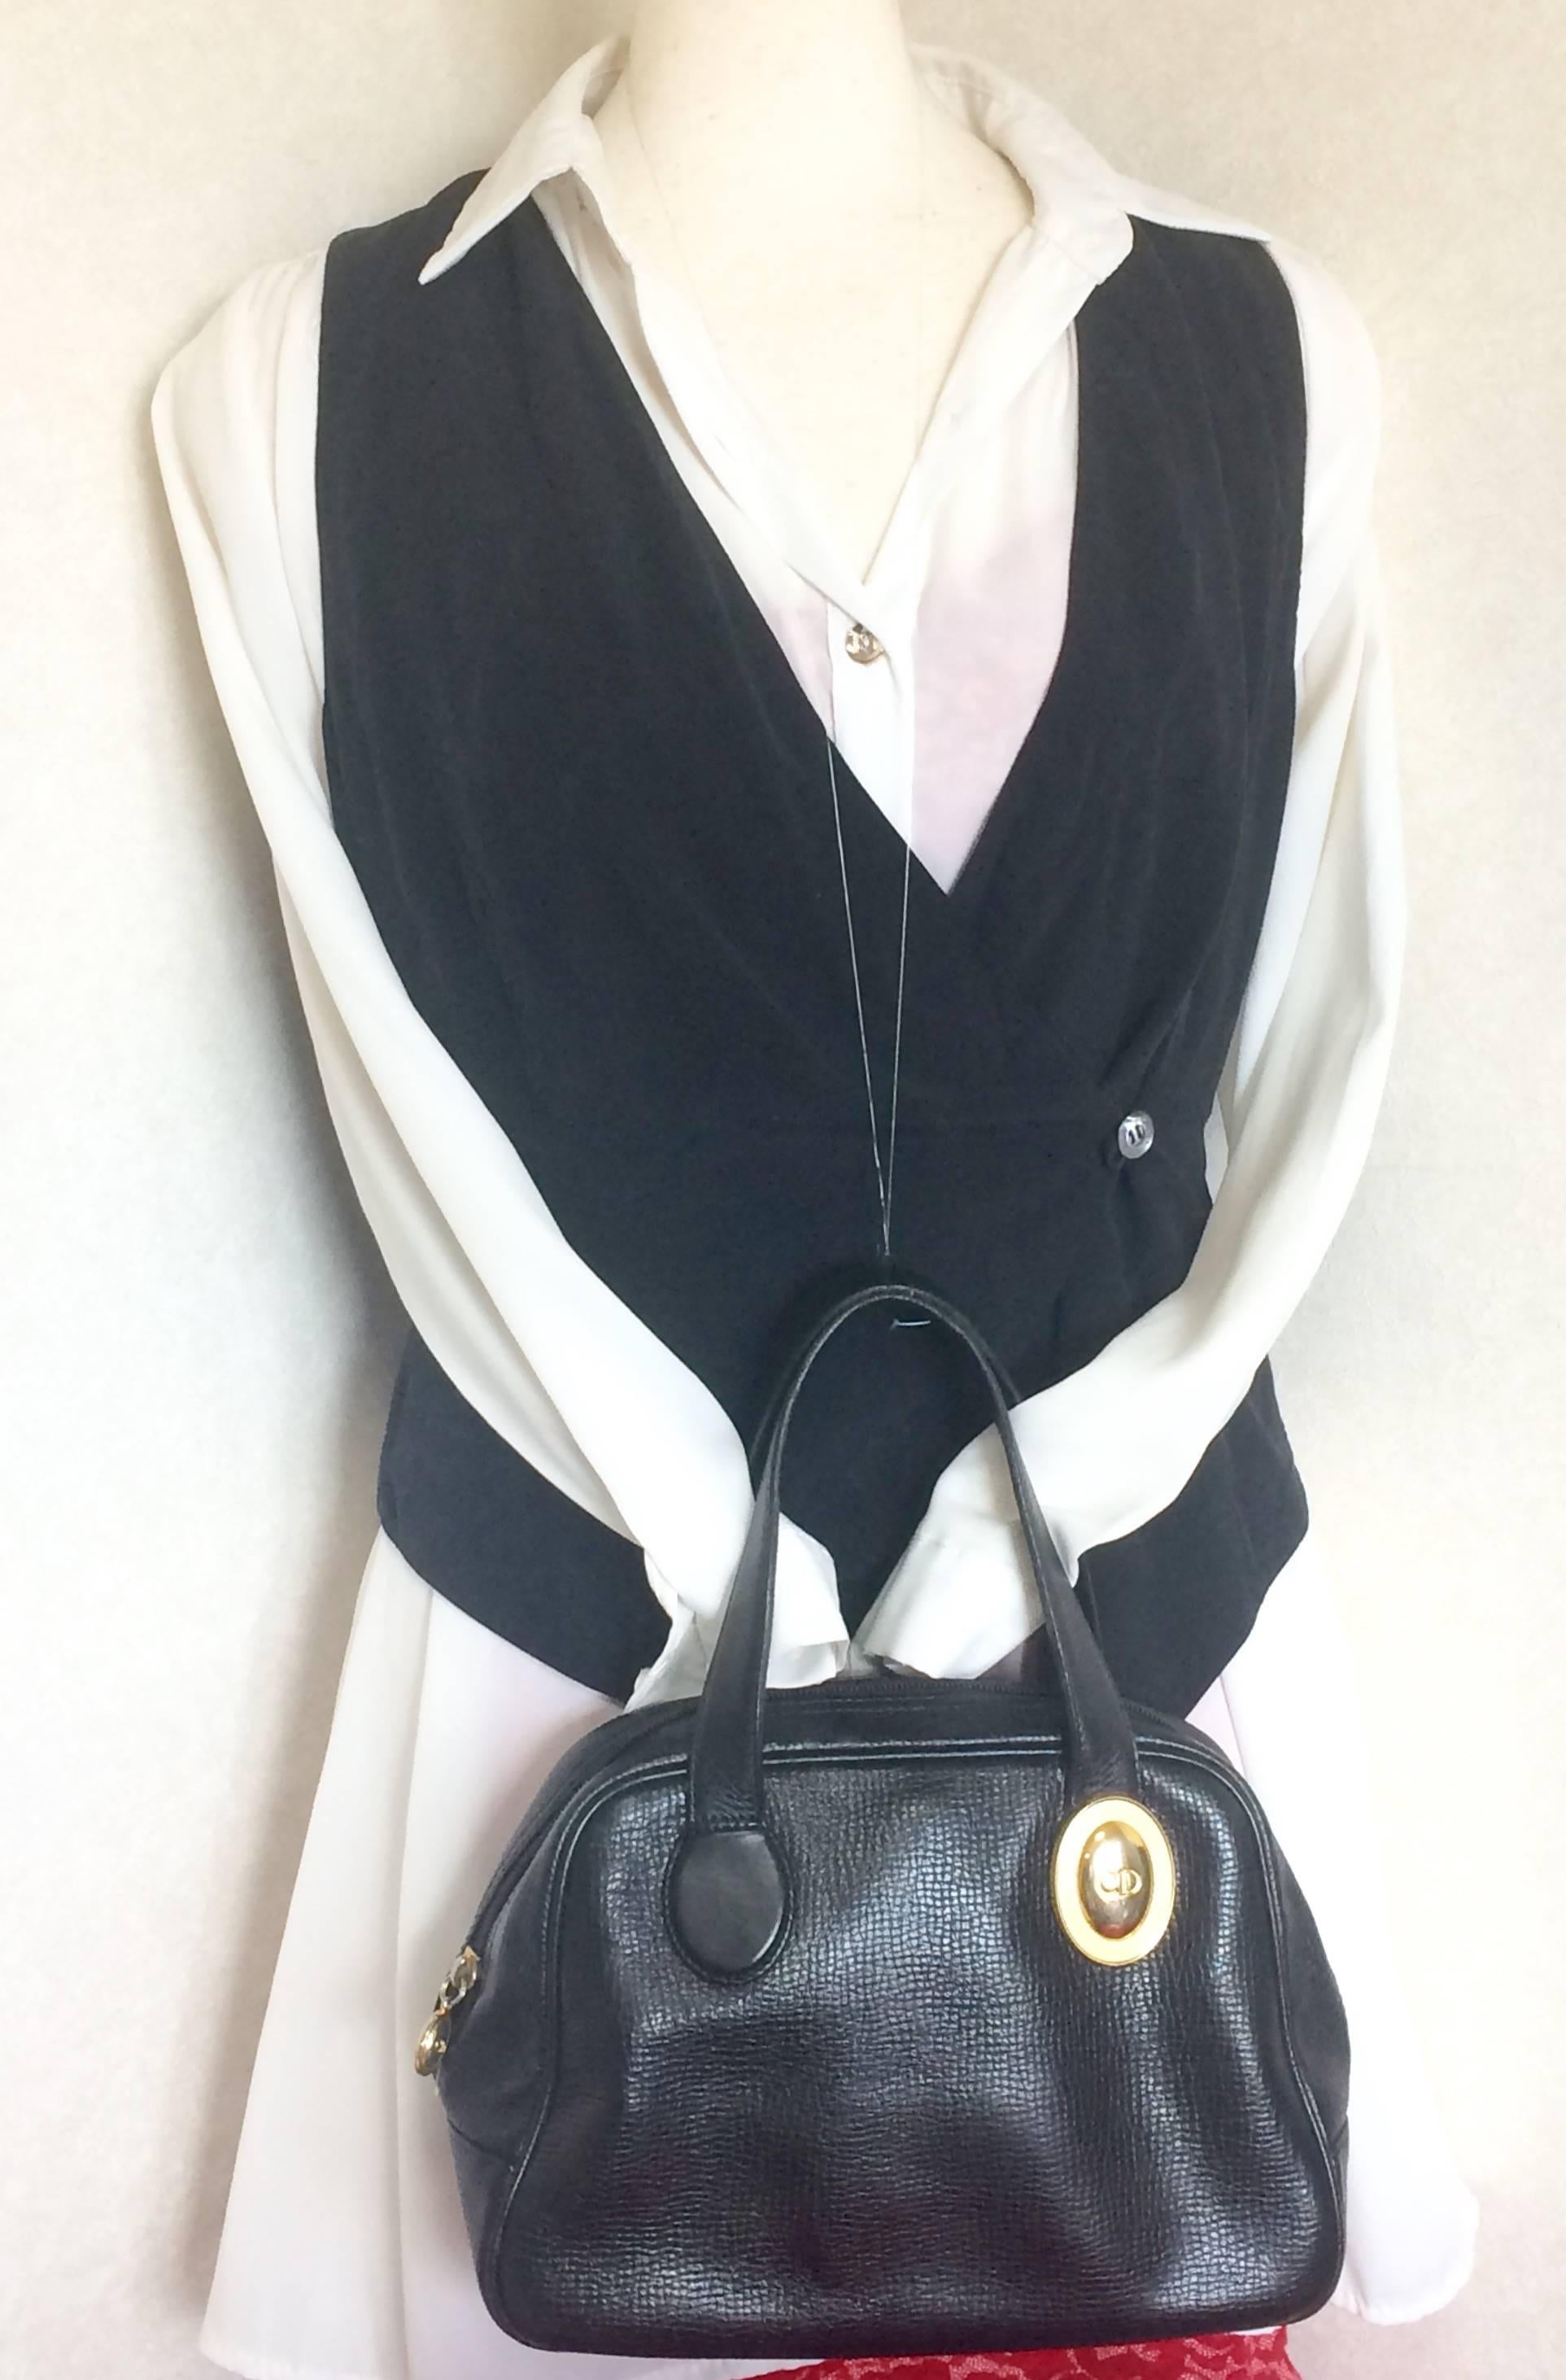 Vintage Christian Dior black leather mini bolide style handbag with logo motif. 5